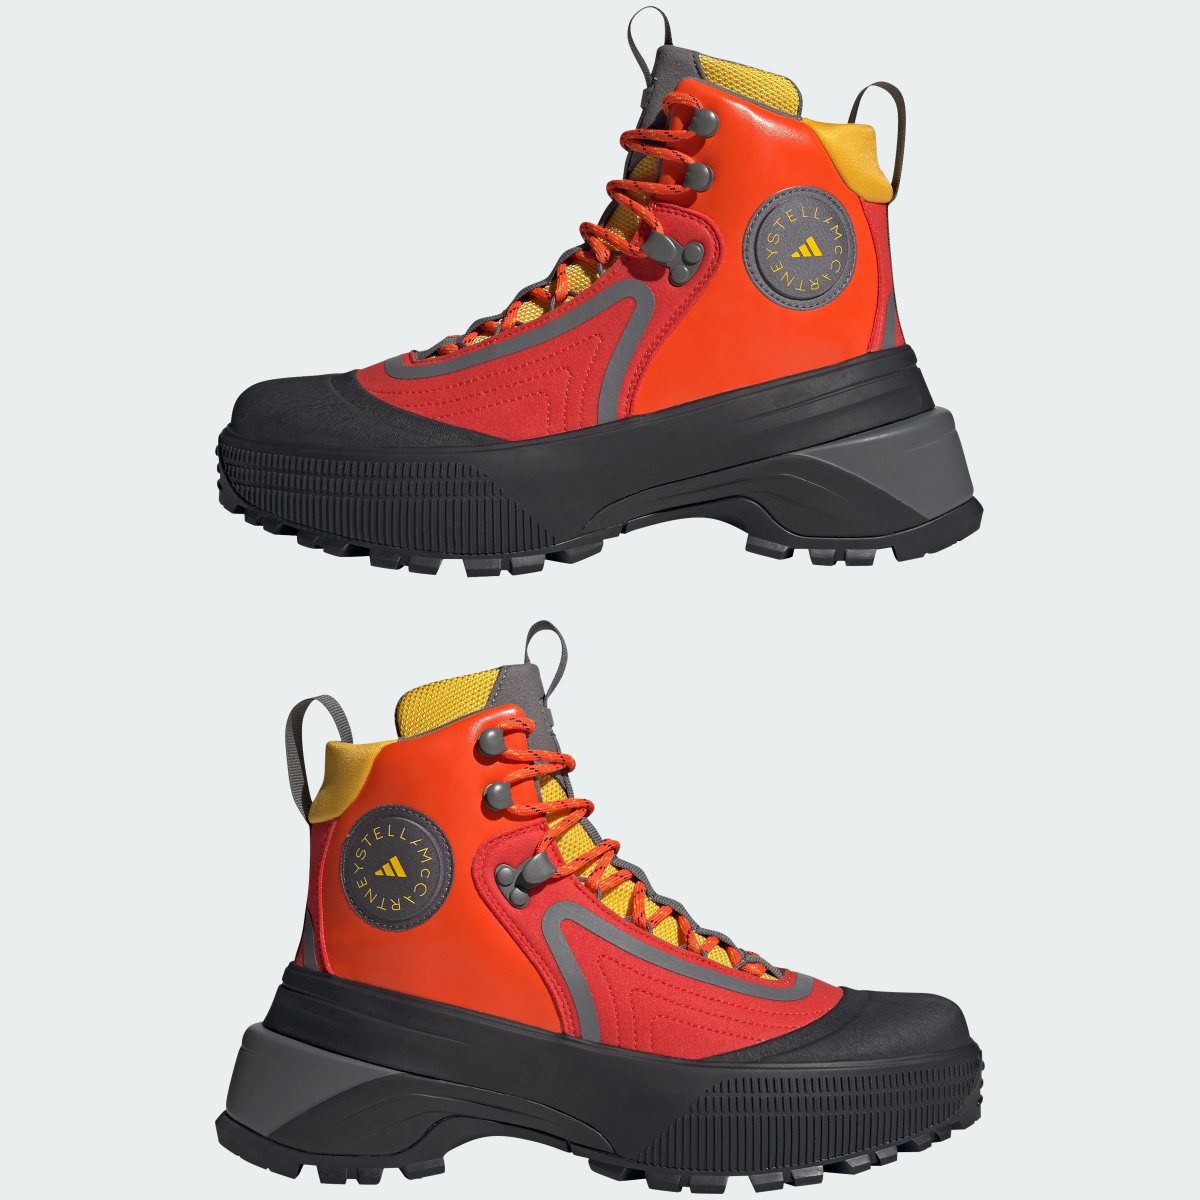 Adidas by Stella McCartney x Terrex Hiking Boots. 8